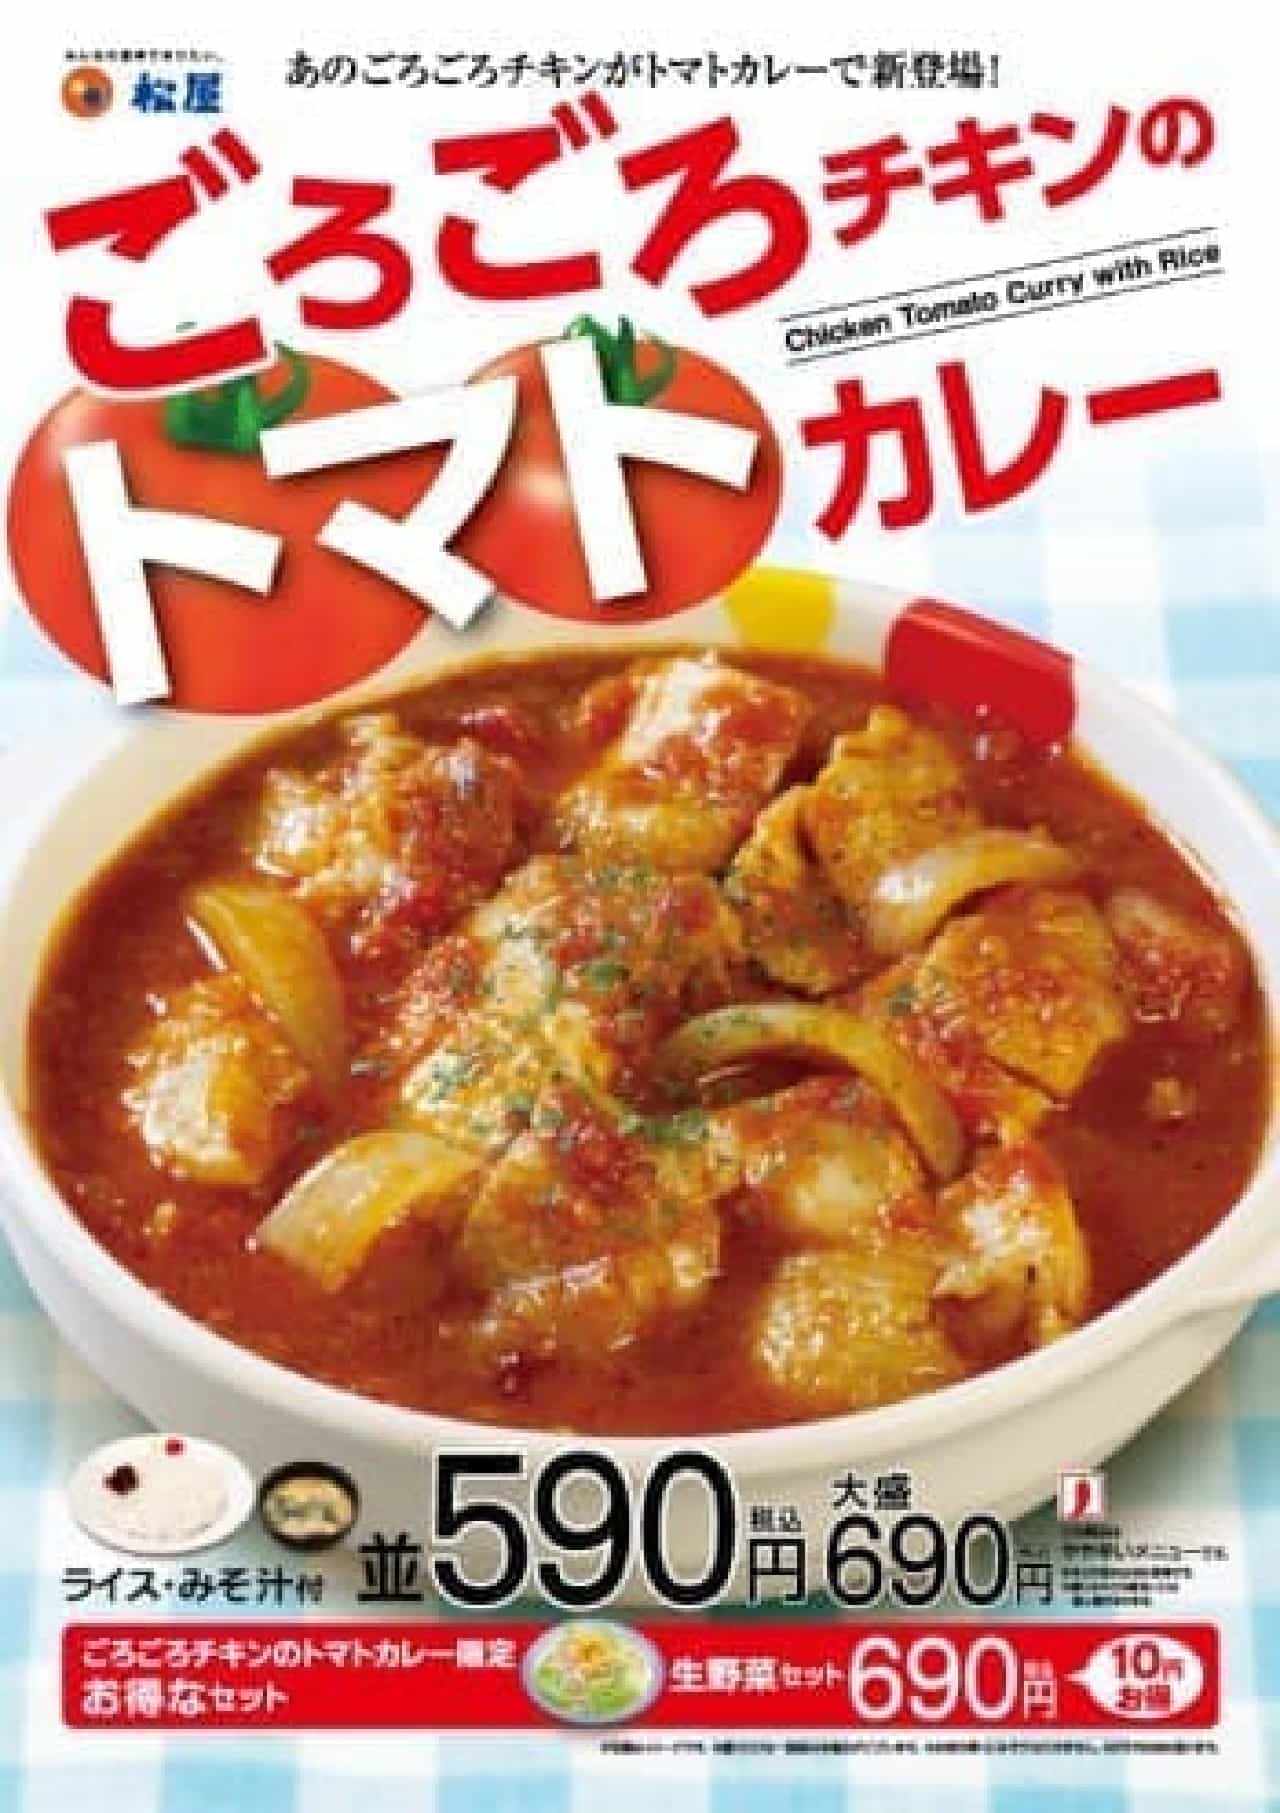 Matsuya "Chicken Tomato Curry"